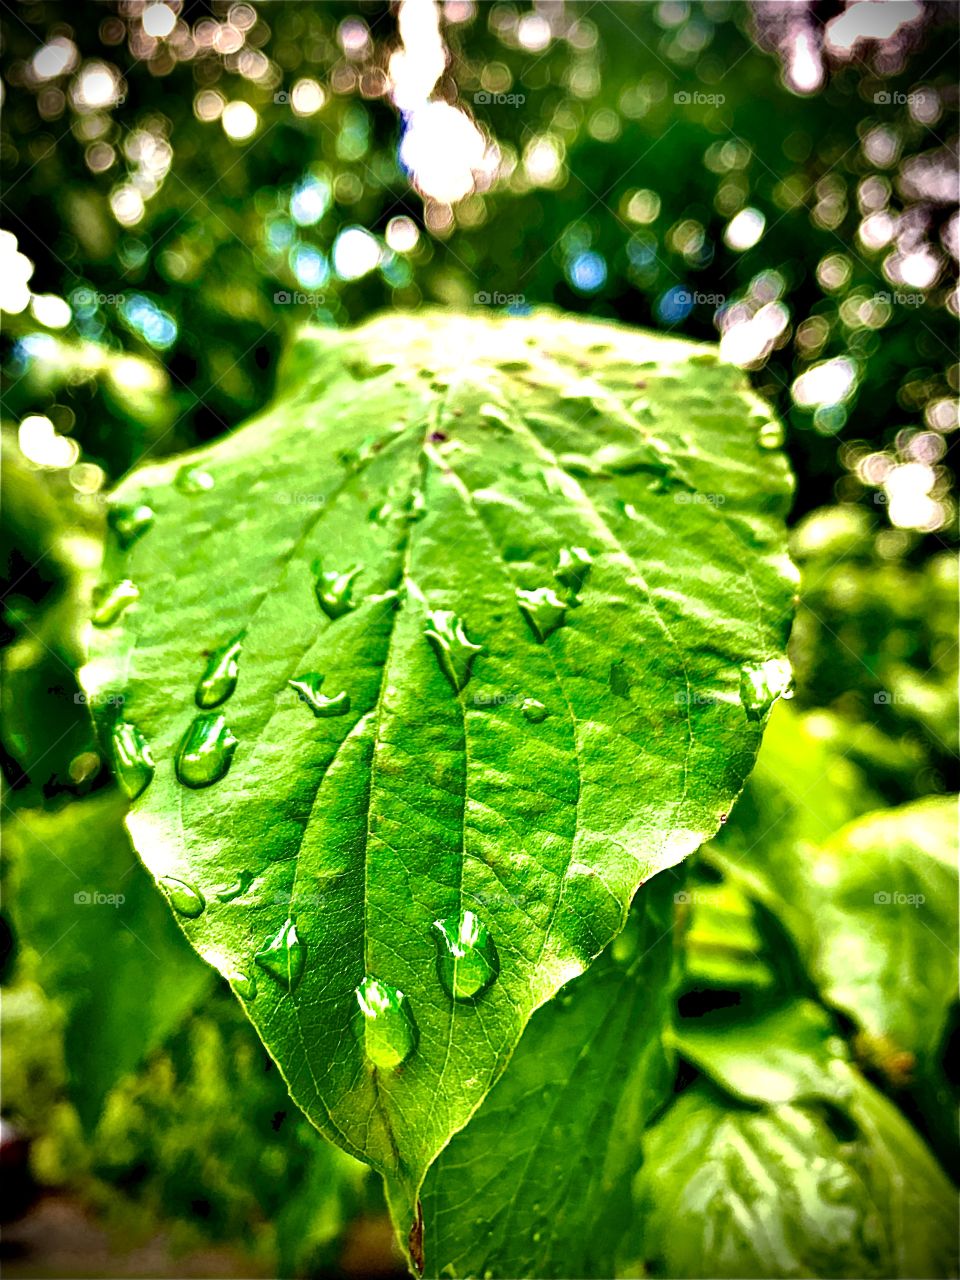 Rain on a leaf